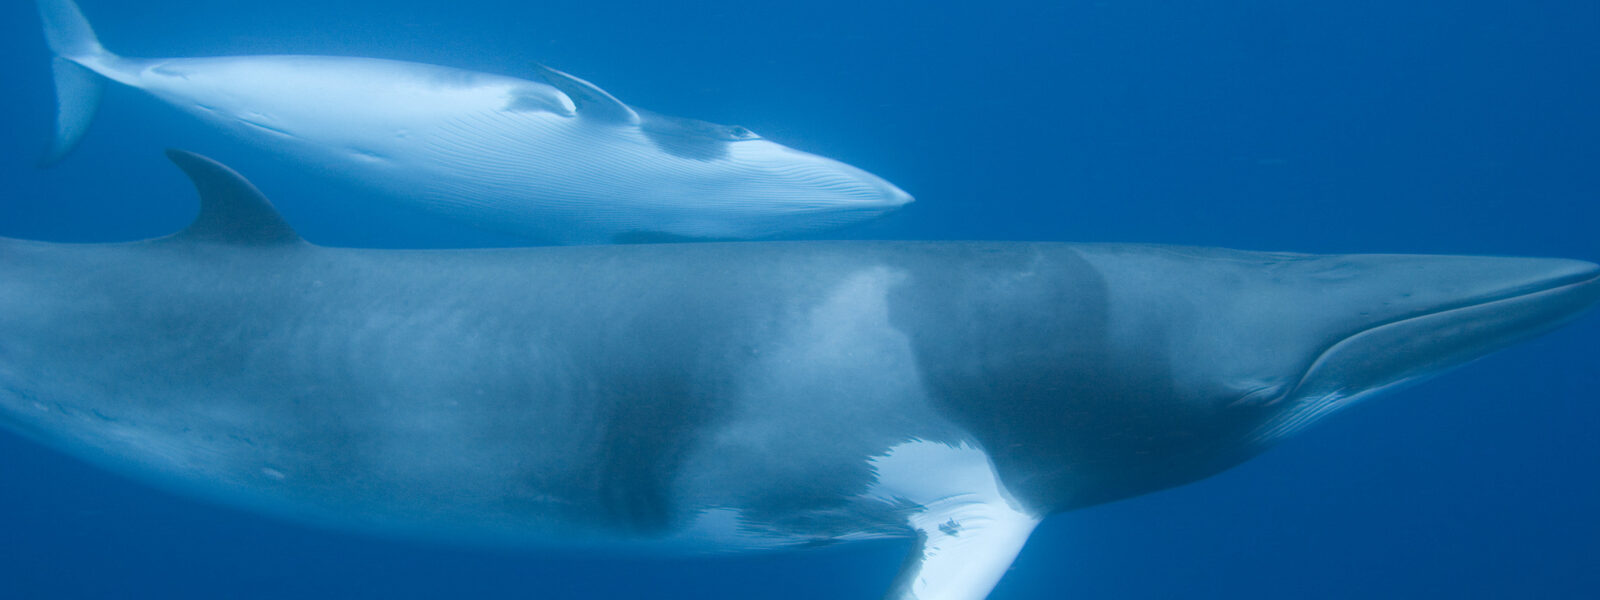 Minke Whale and Calf.  Photo Credit: iStock